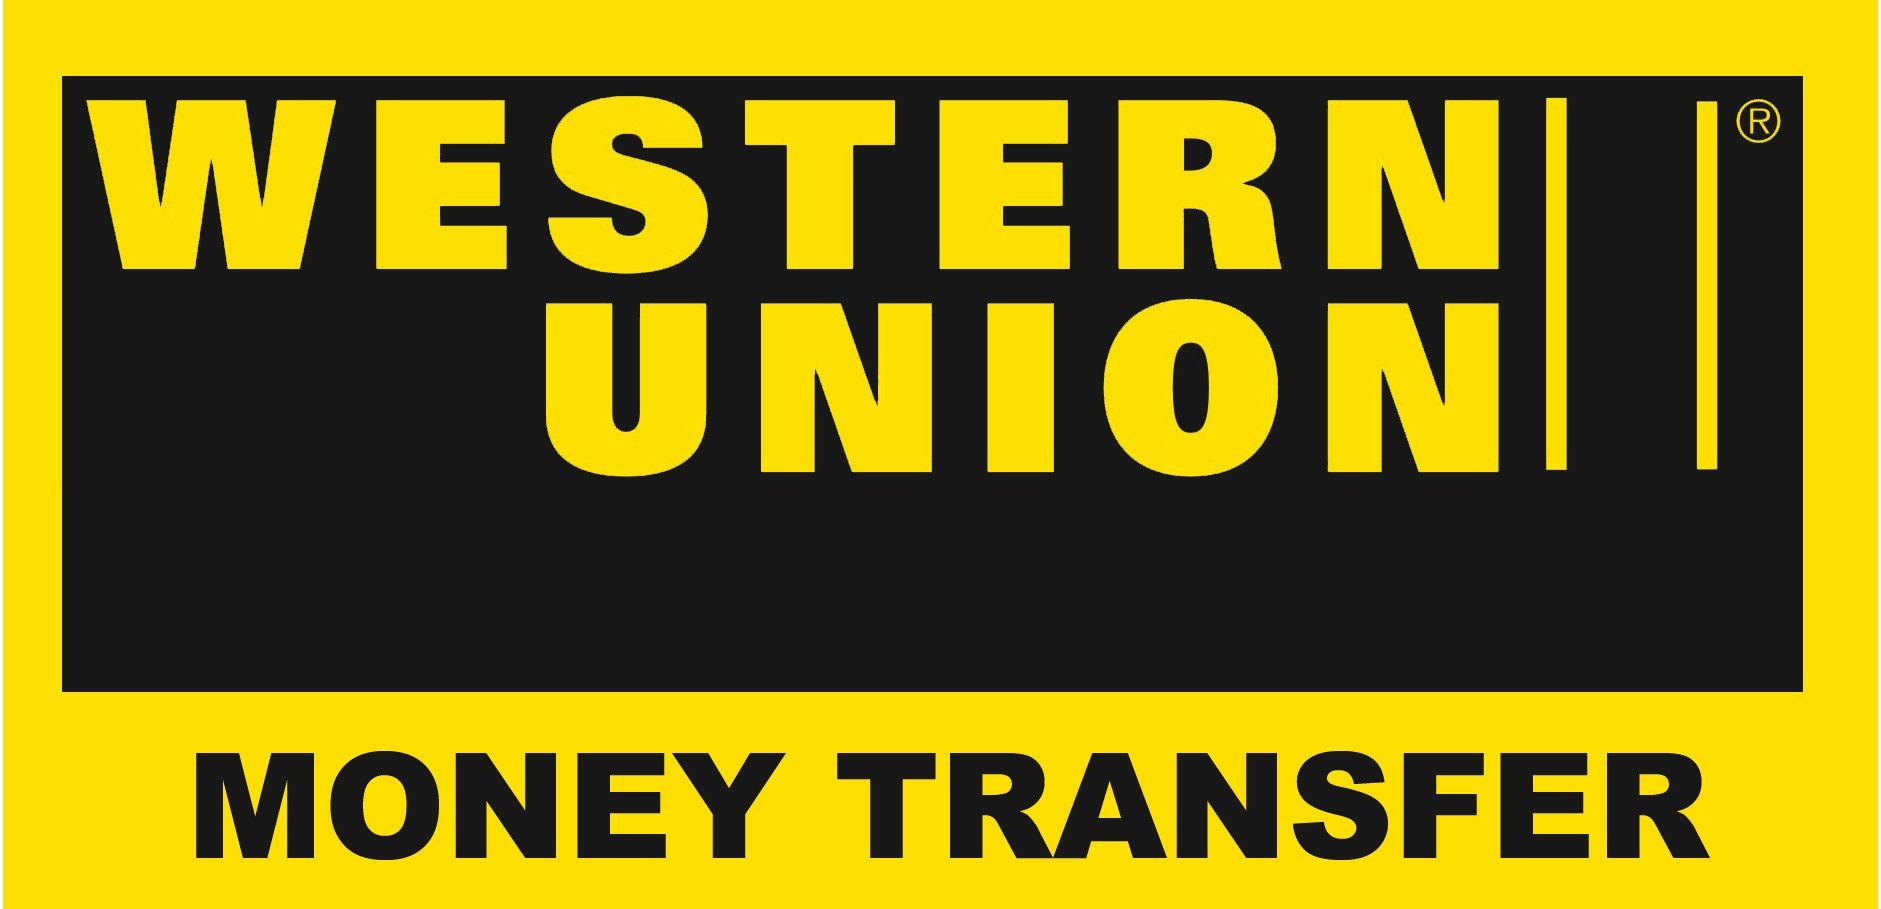 Westernunion Logo - The Western Union Logo [High res] [Full color] : notinteresting